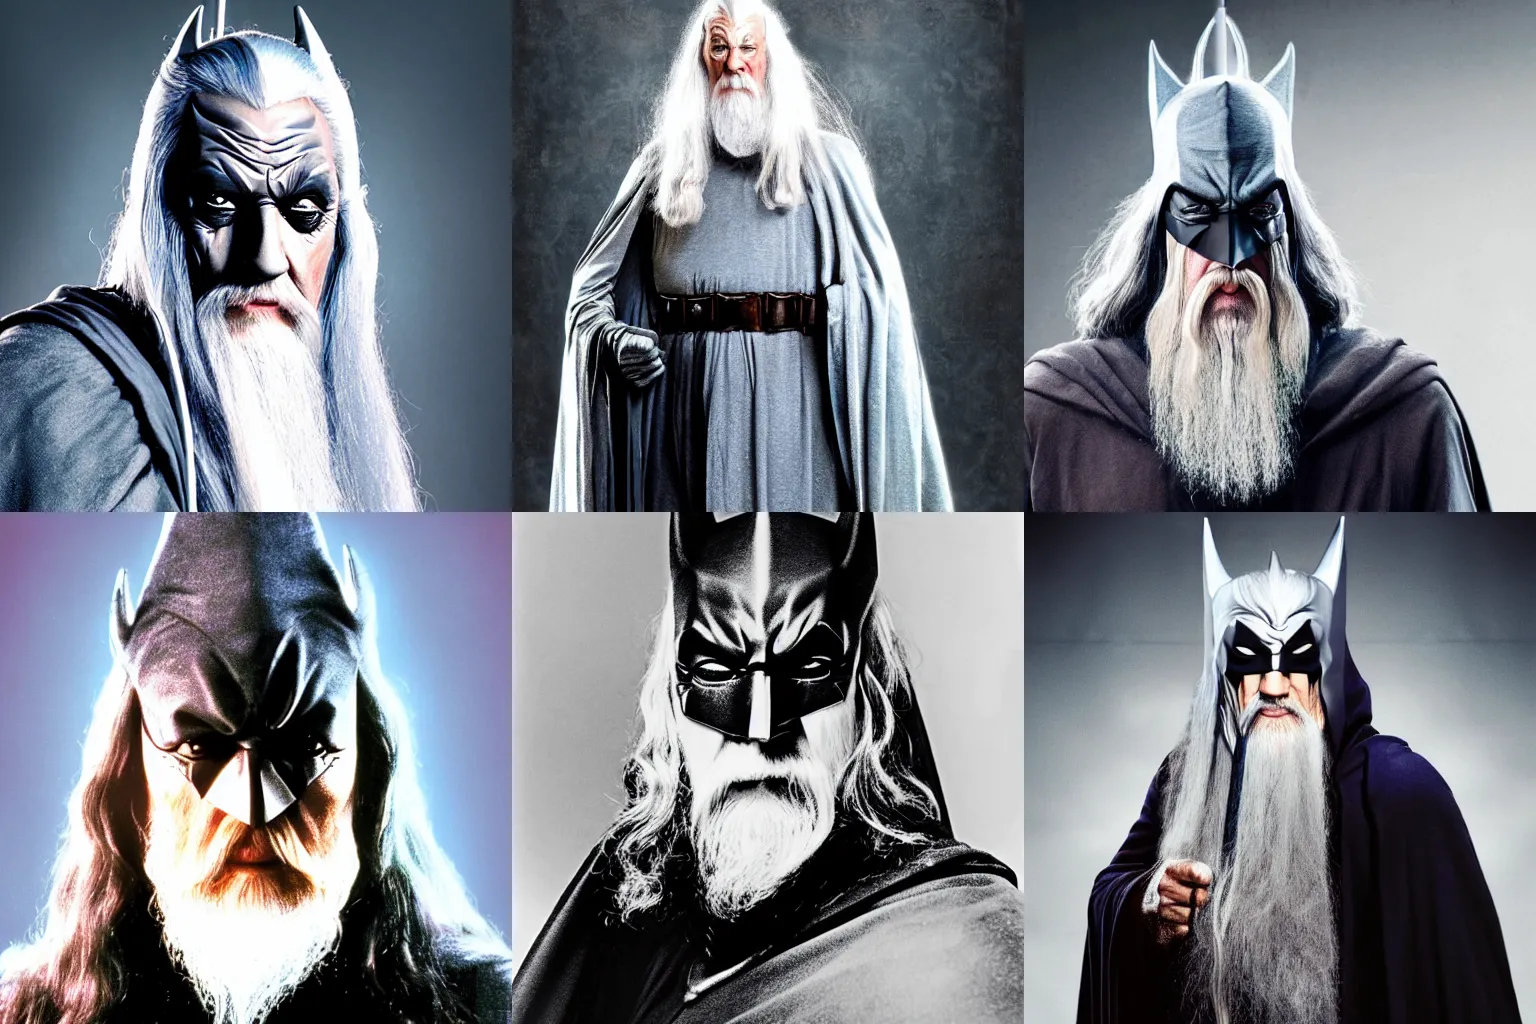 Prompt: portrait photo of gandalf dressed as batman